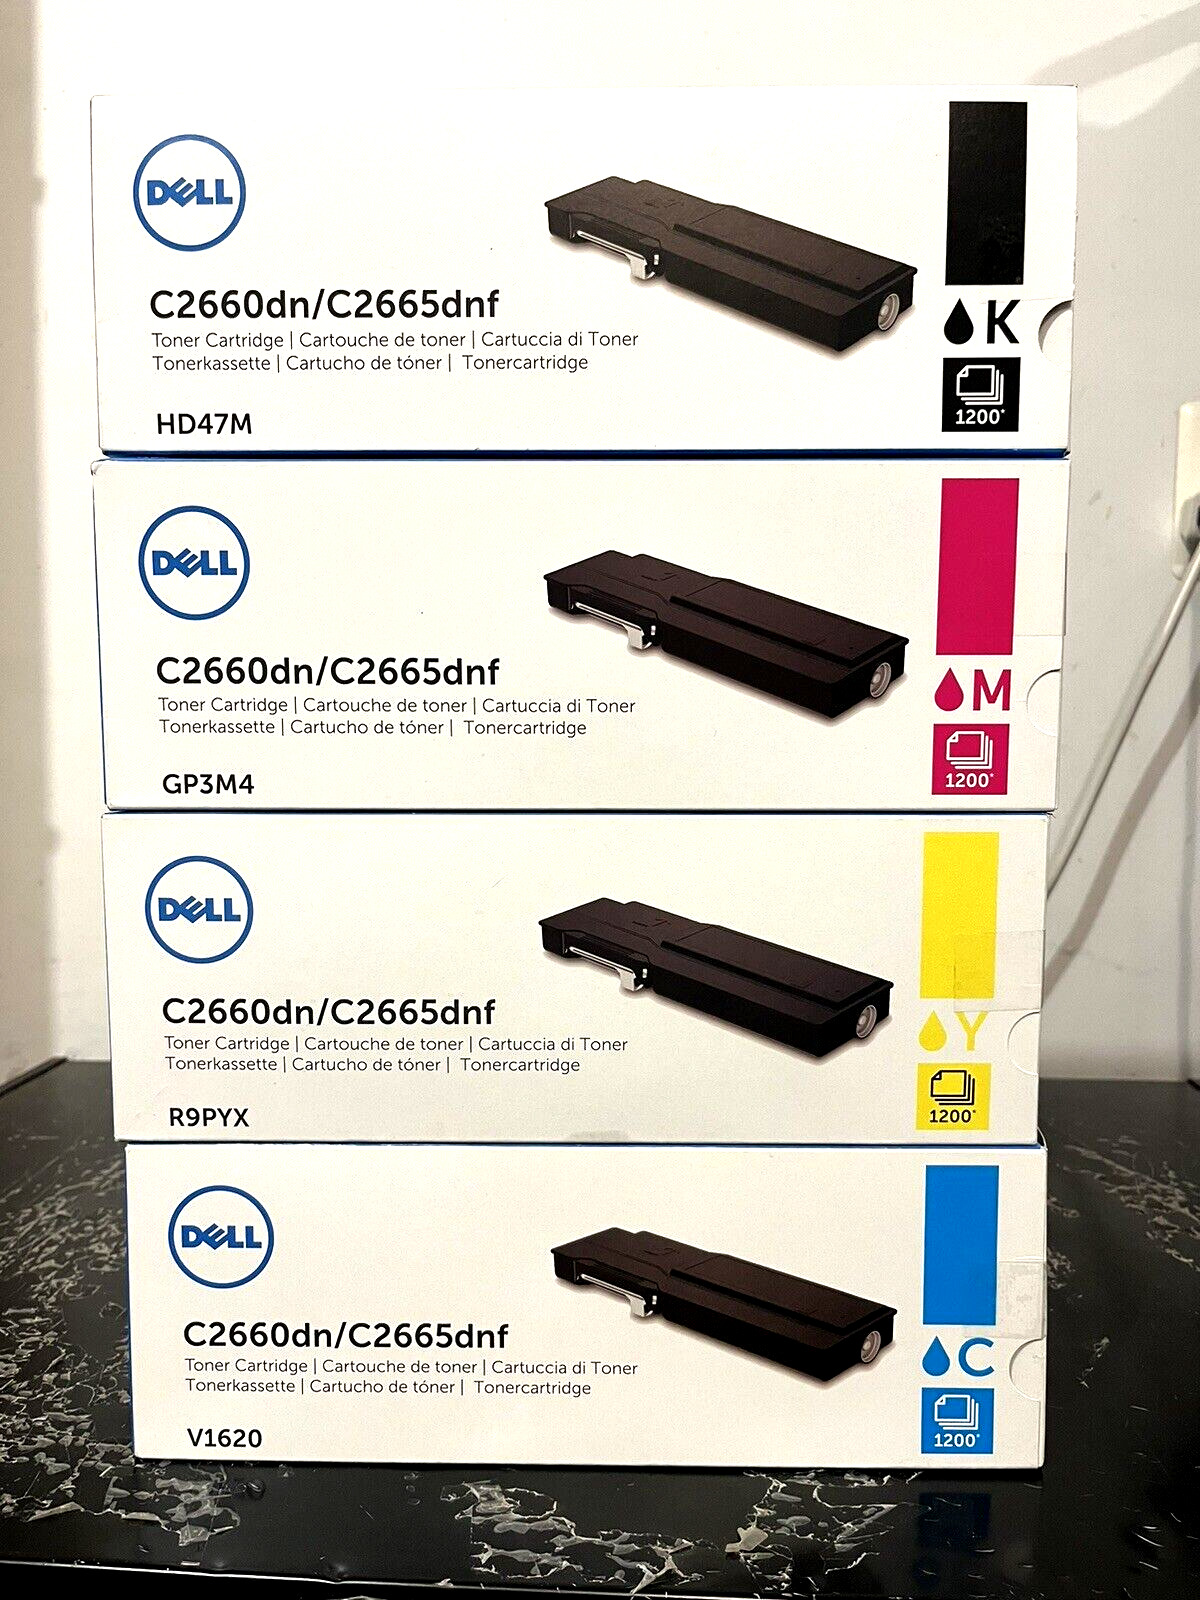 Genuine Dell C2660dn/C2665dnf Toner Cartridge,(GP3M4,MYC Sealed,K opened,Set